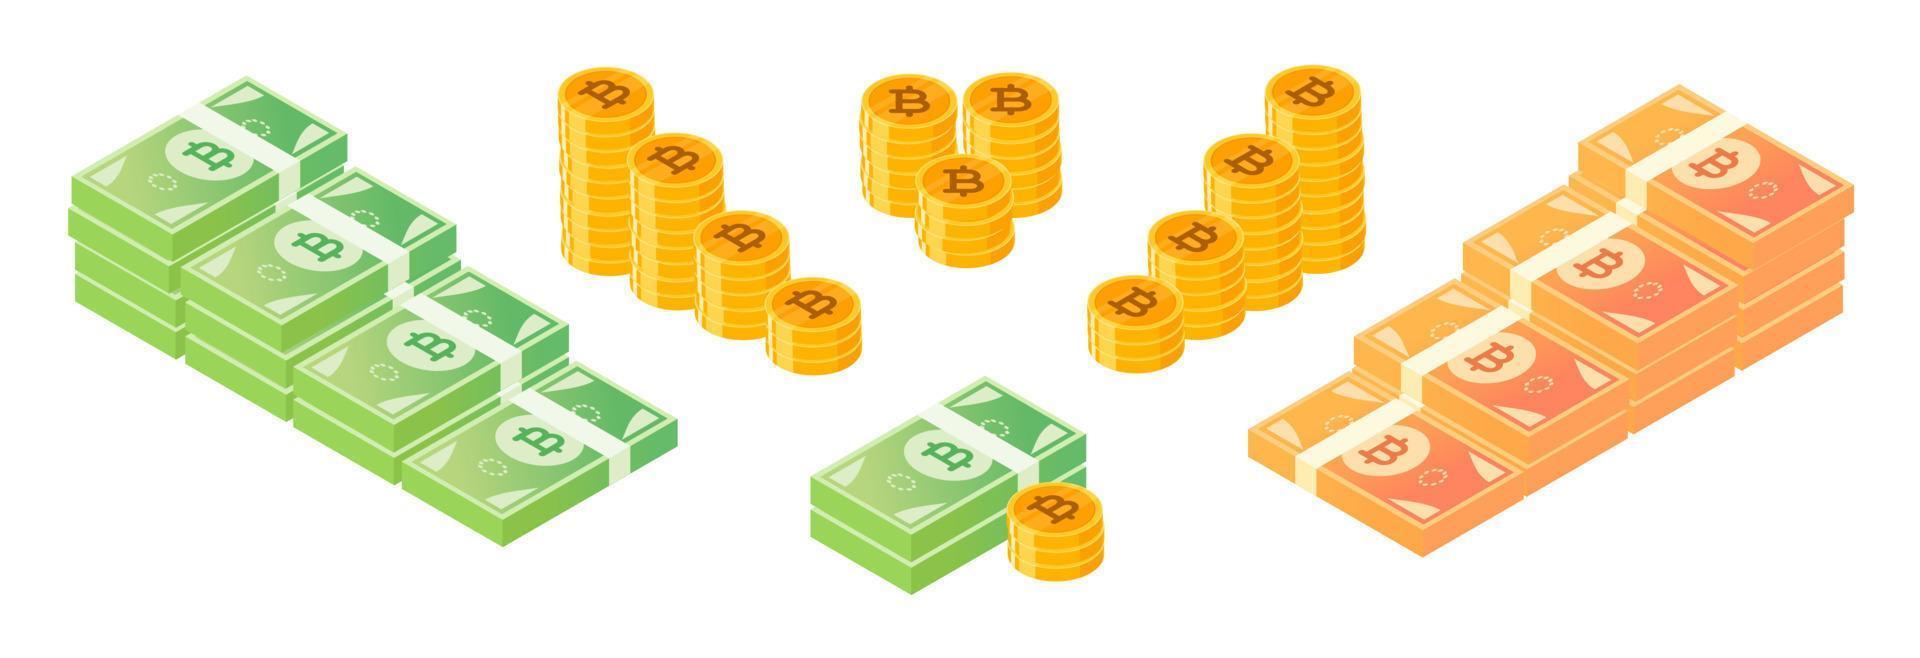 Thai Baht Money and Coin Bundle Set vector